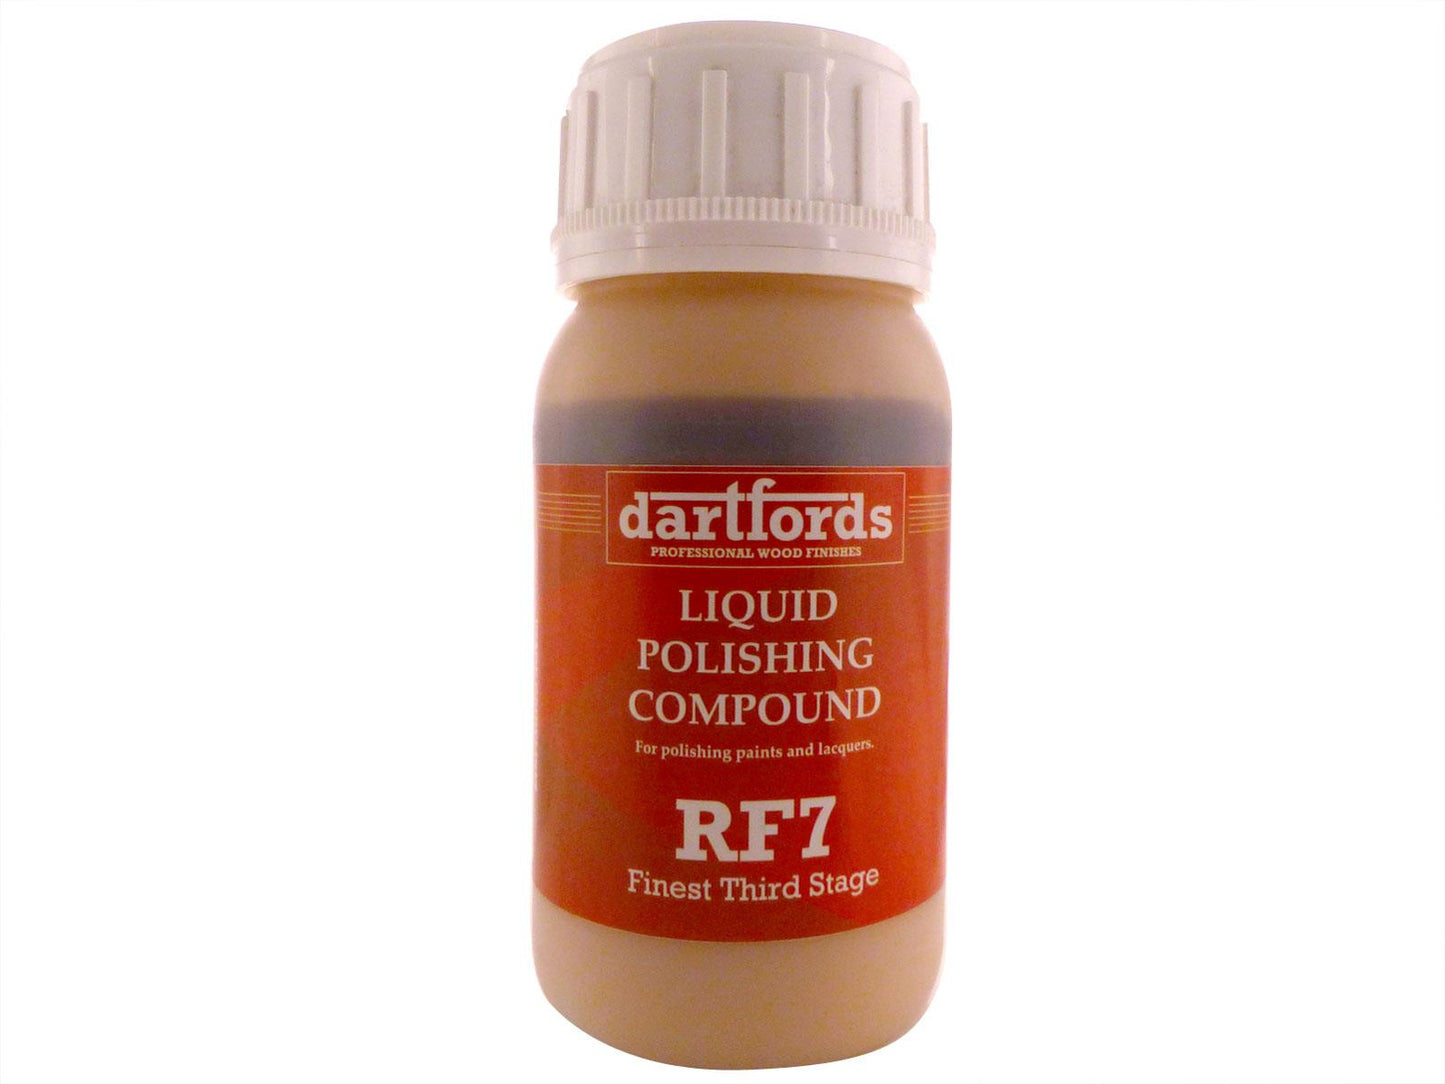 dartfords Liquid Polishing Compound - 230ml Tin, Stage 3 Finest